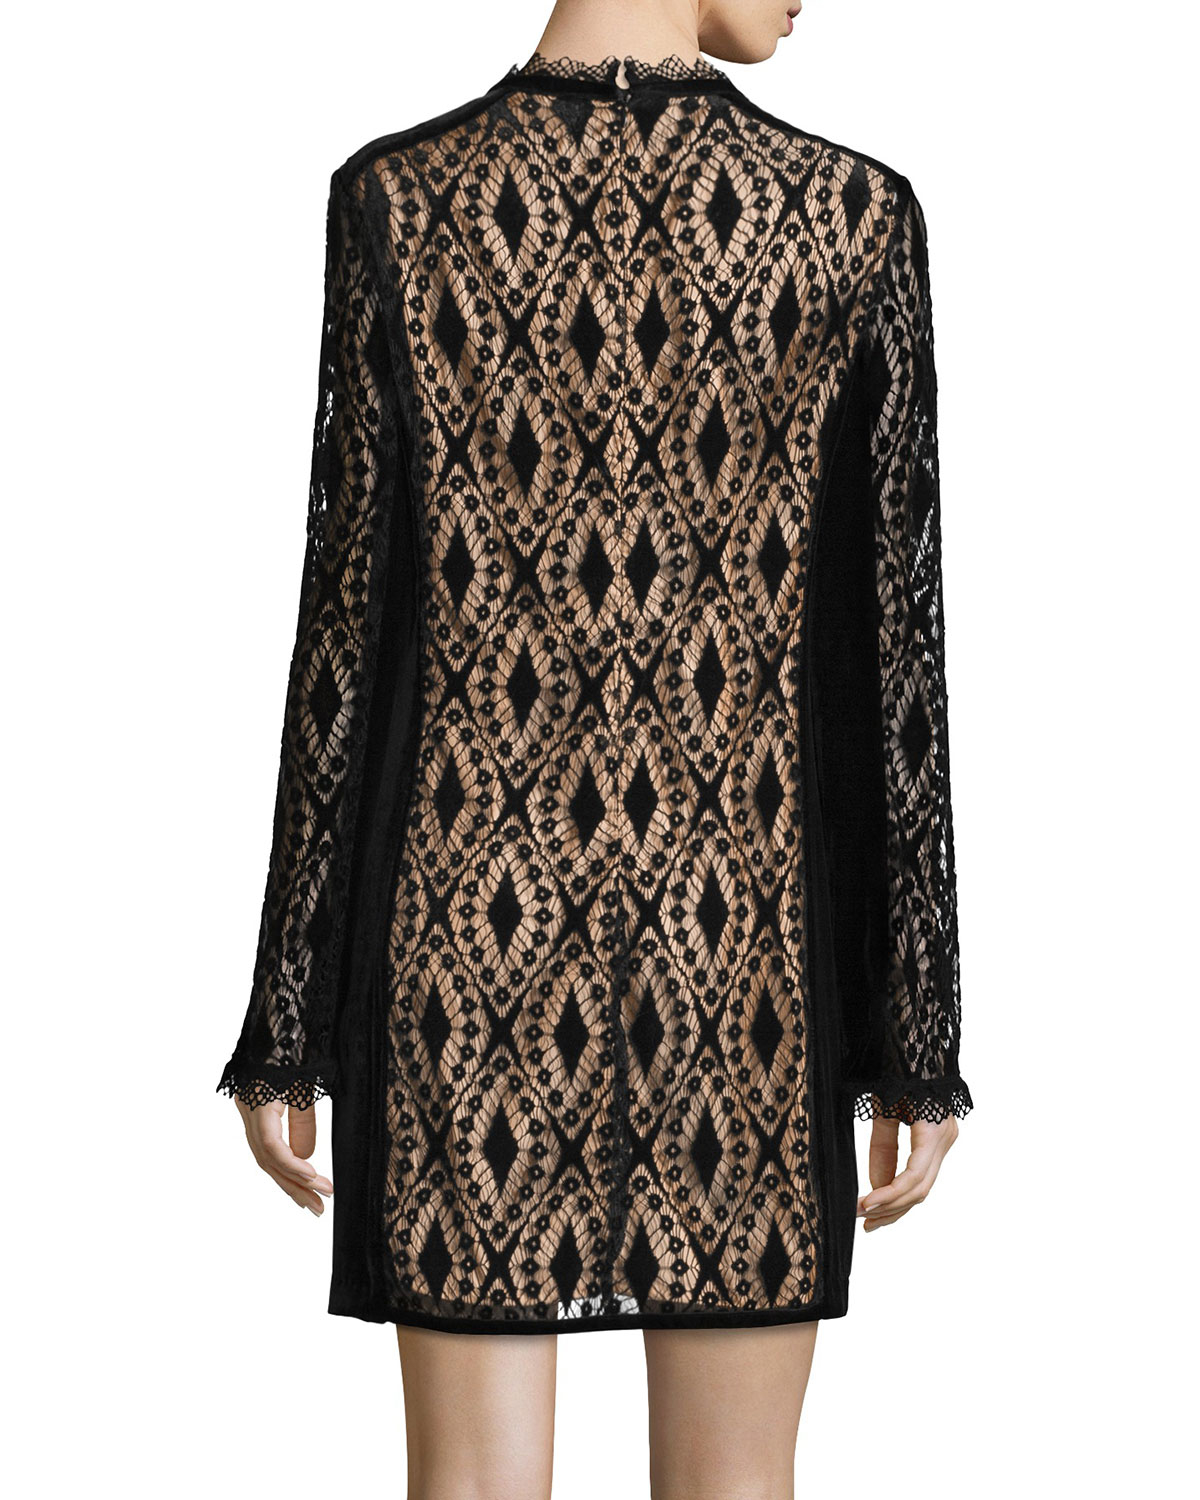 Lyst - Nanette Lepore Long-Sleeve Lace Shift Dress in Black